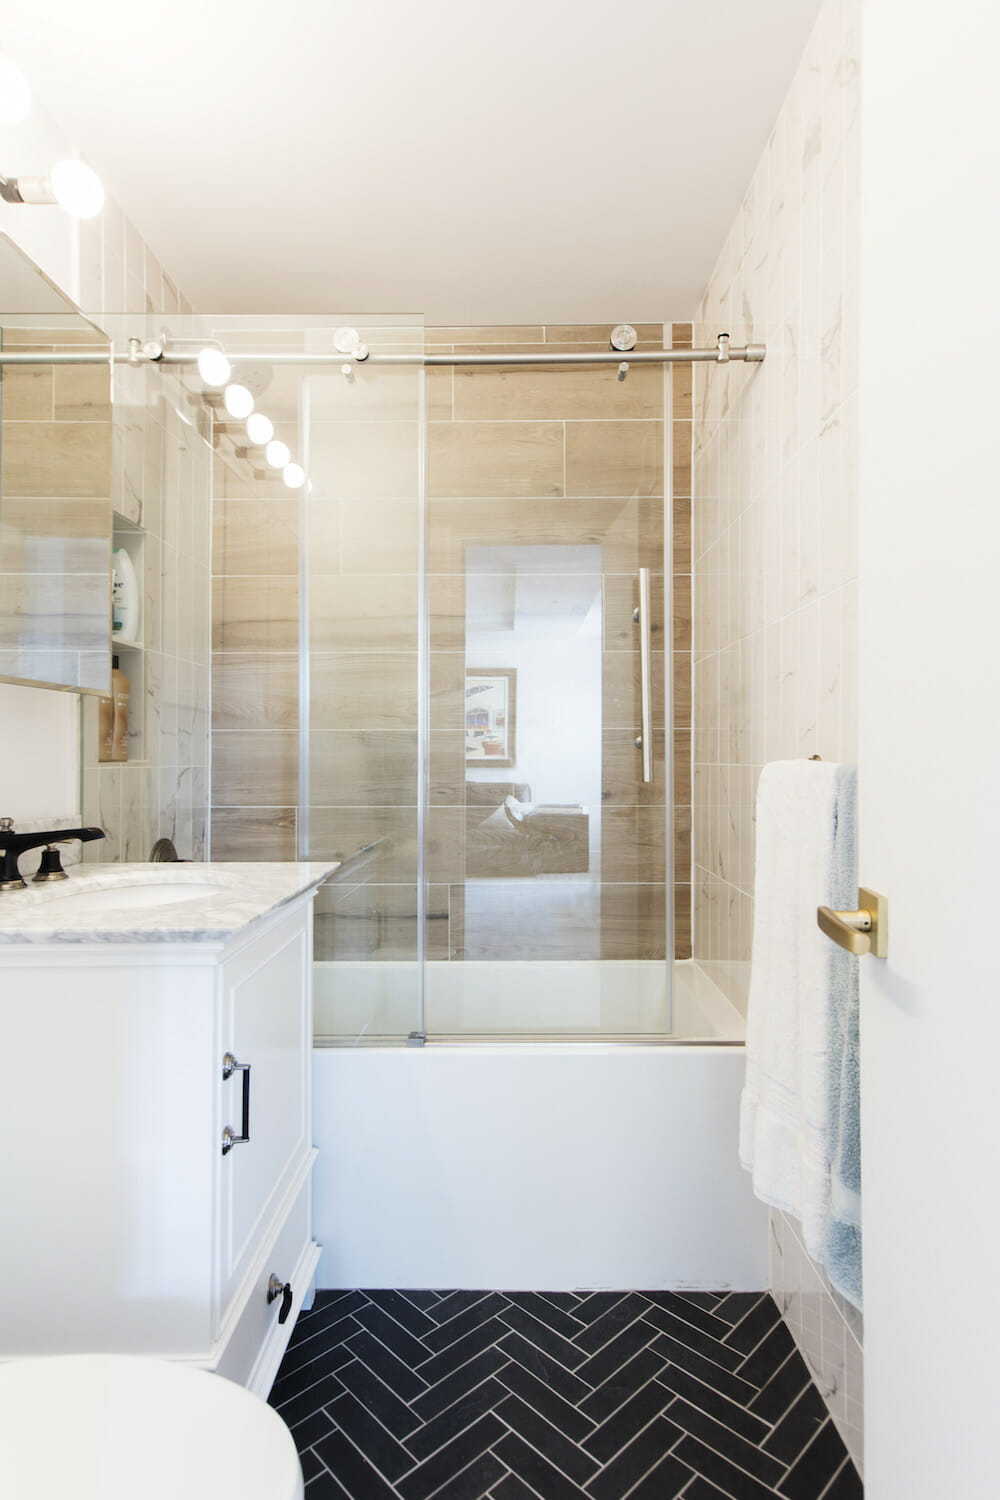 home renovation, bathroom renovation, black and white tile, glass shower door, bathroom trends 2019